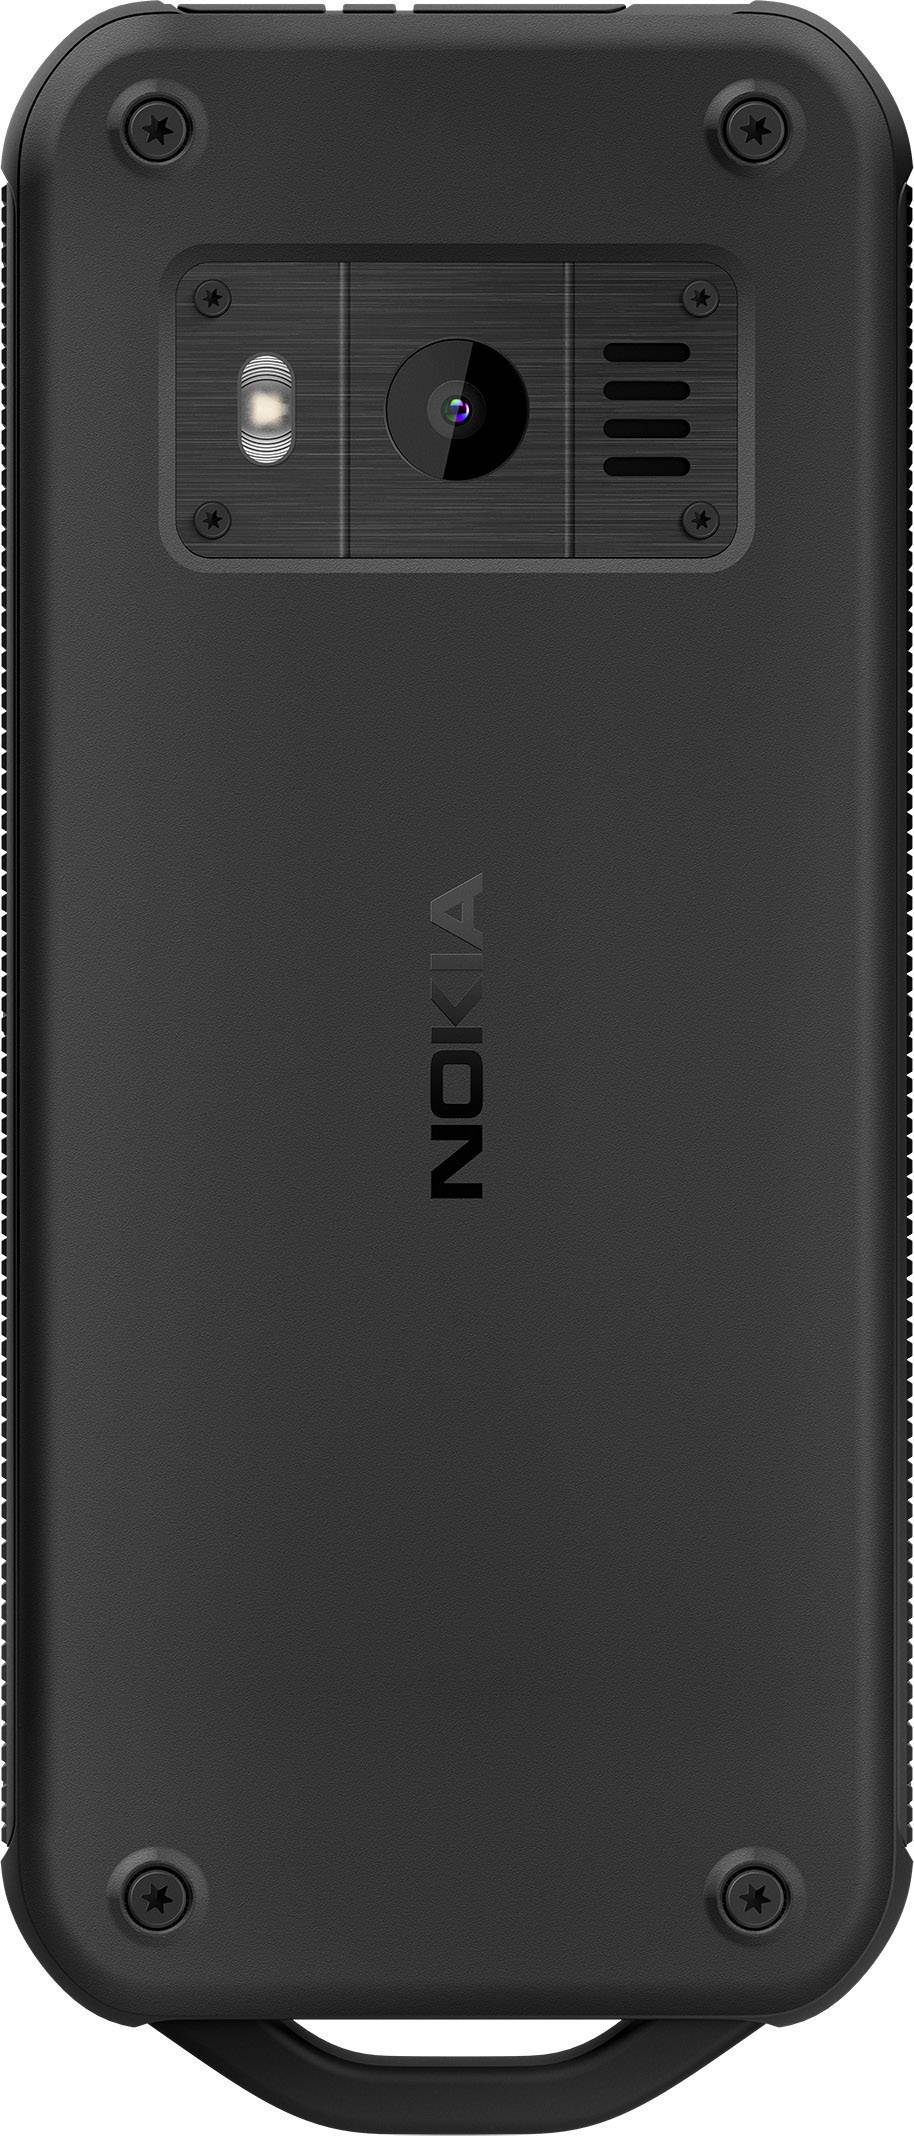 Buy Nokia 800 Tough TA-1180 4 GB Feature Phone - 6.1 cm (2.4